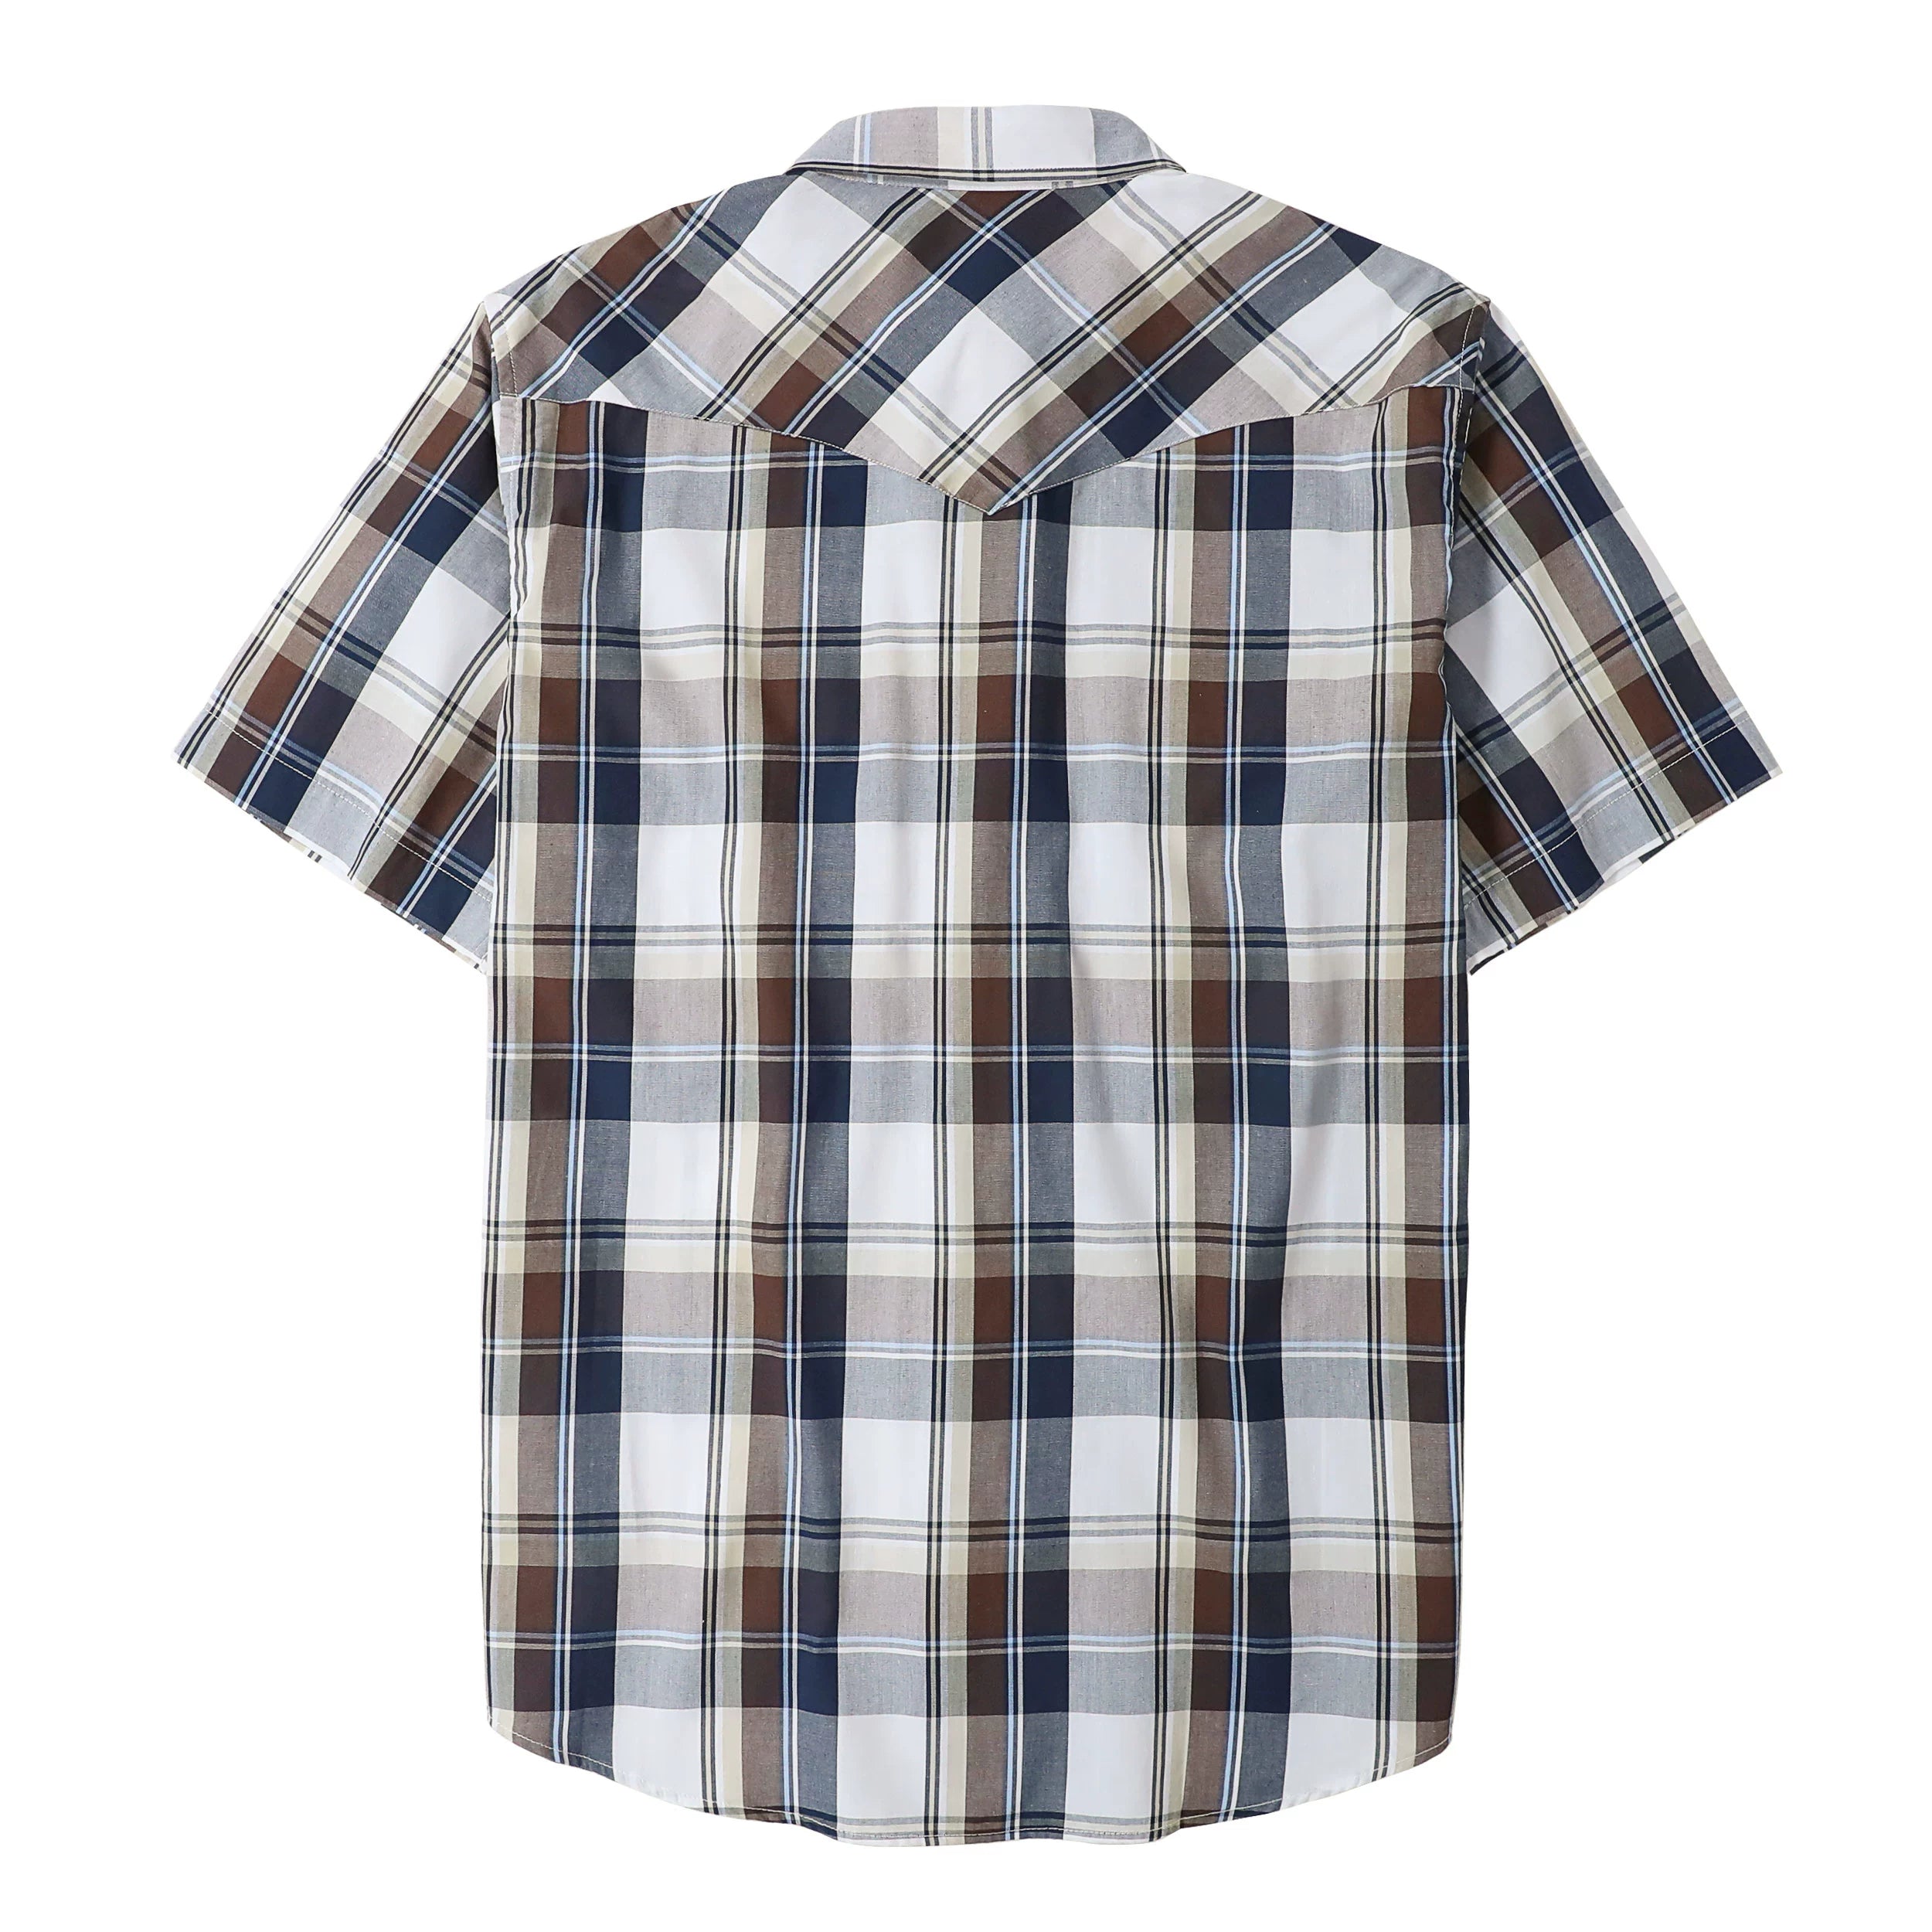 Dubinik® Western Shirts for Men Short Sleeve Plaid Pearl Snap Shirts for Men Button Up Shirt Cowboy Casual Work Shirt#41006